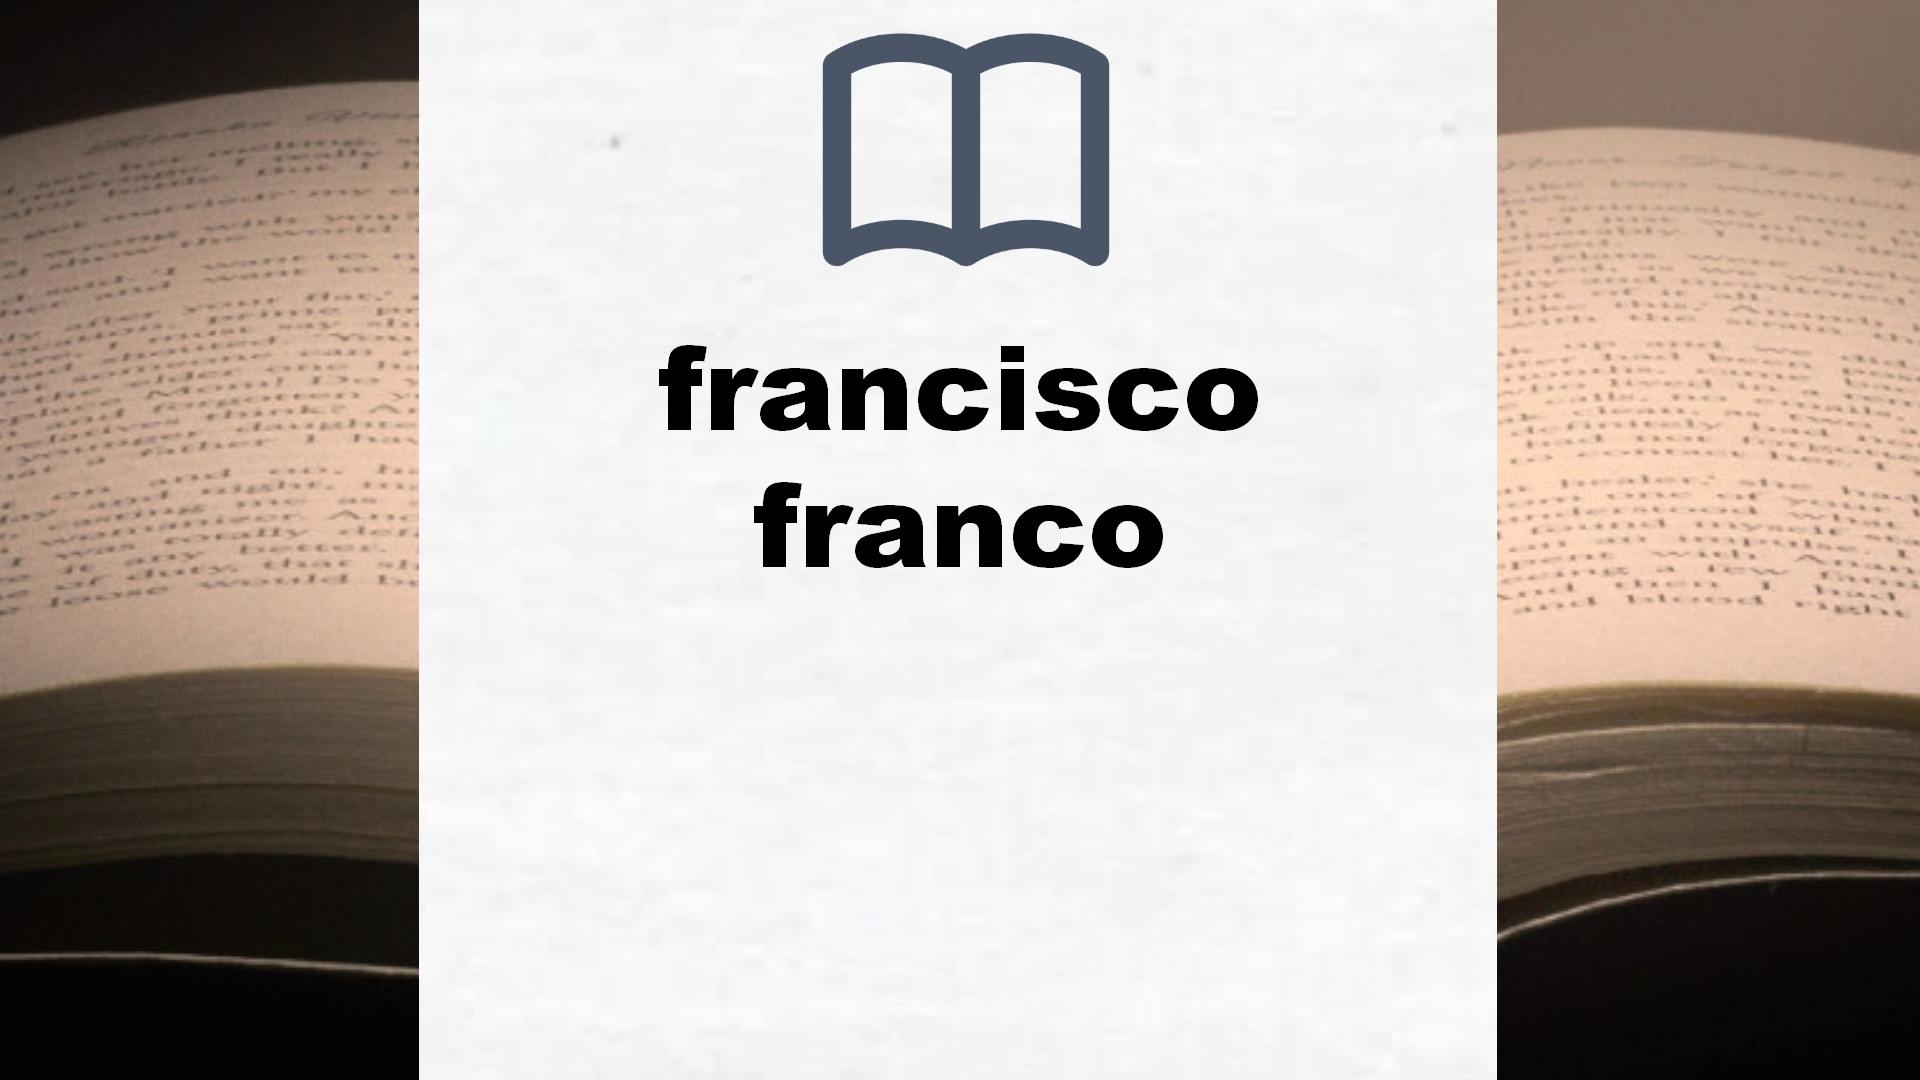 Libros sobre francisco franco